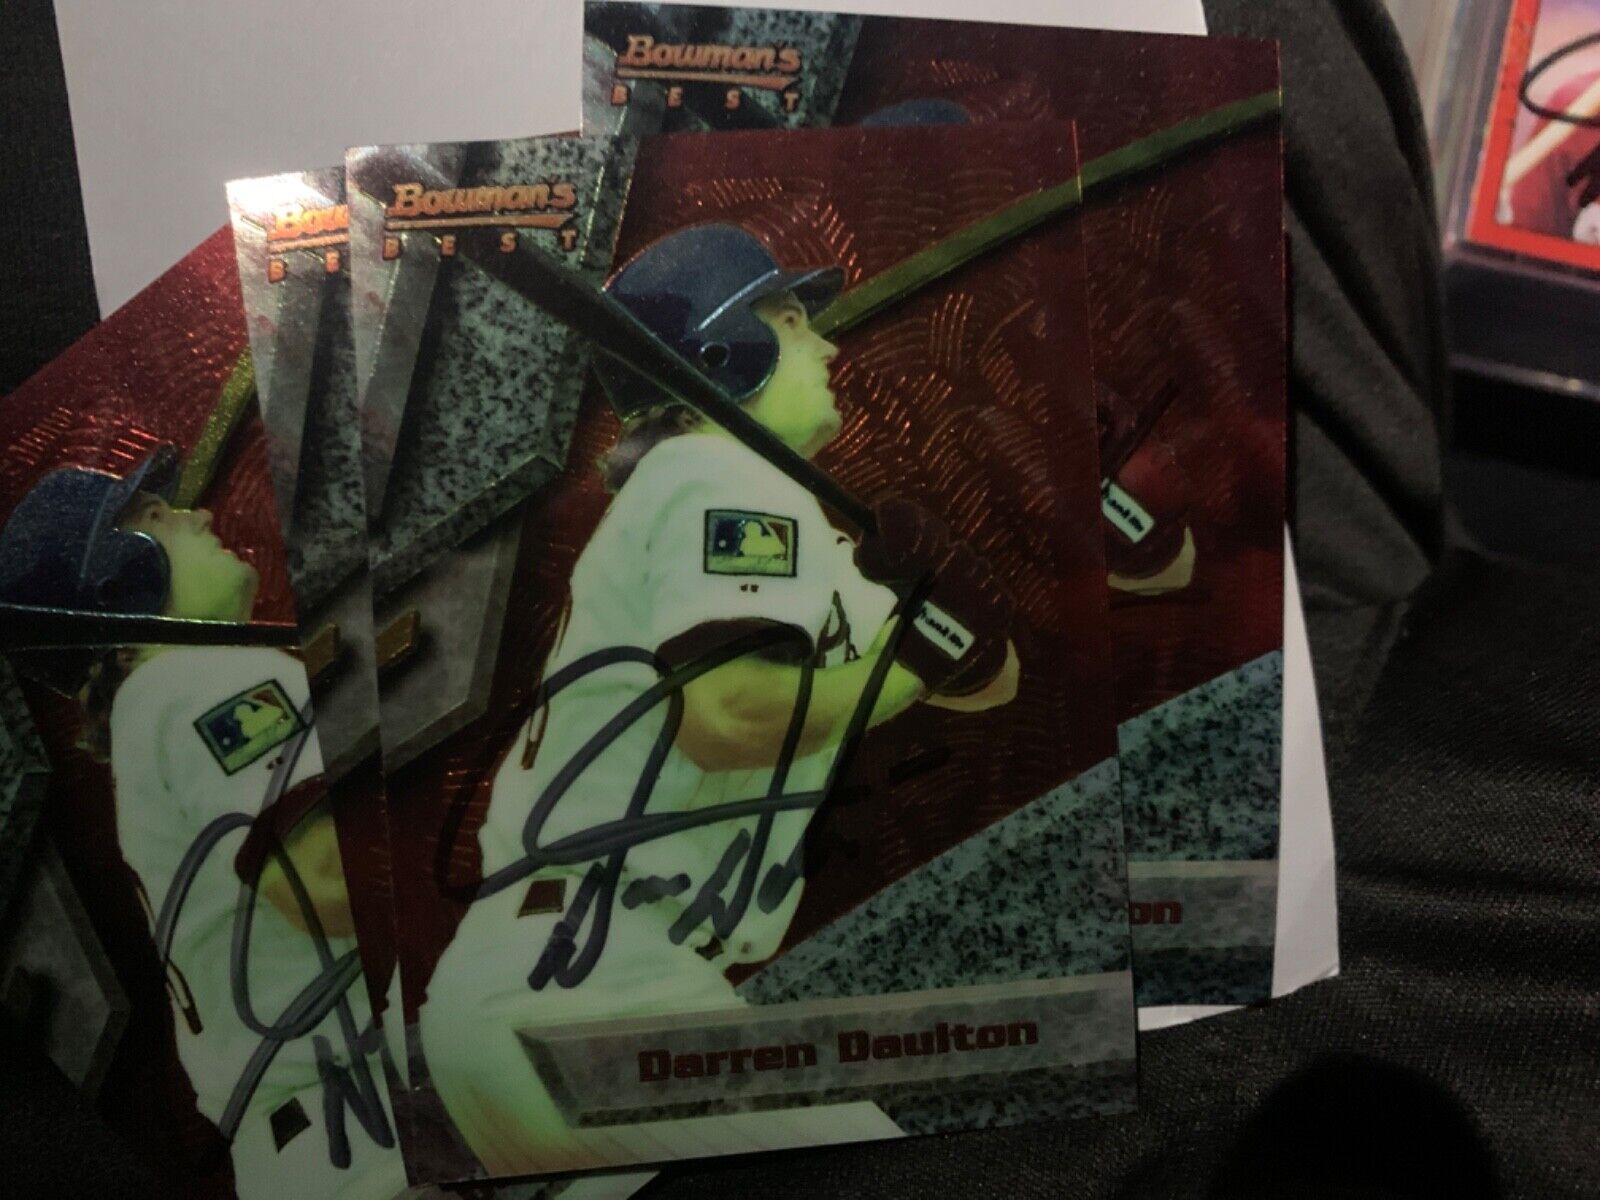 1994 Bowmans Best Darren Daulton Autographed signed Baseball Card